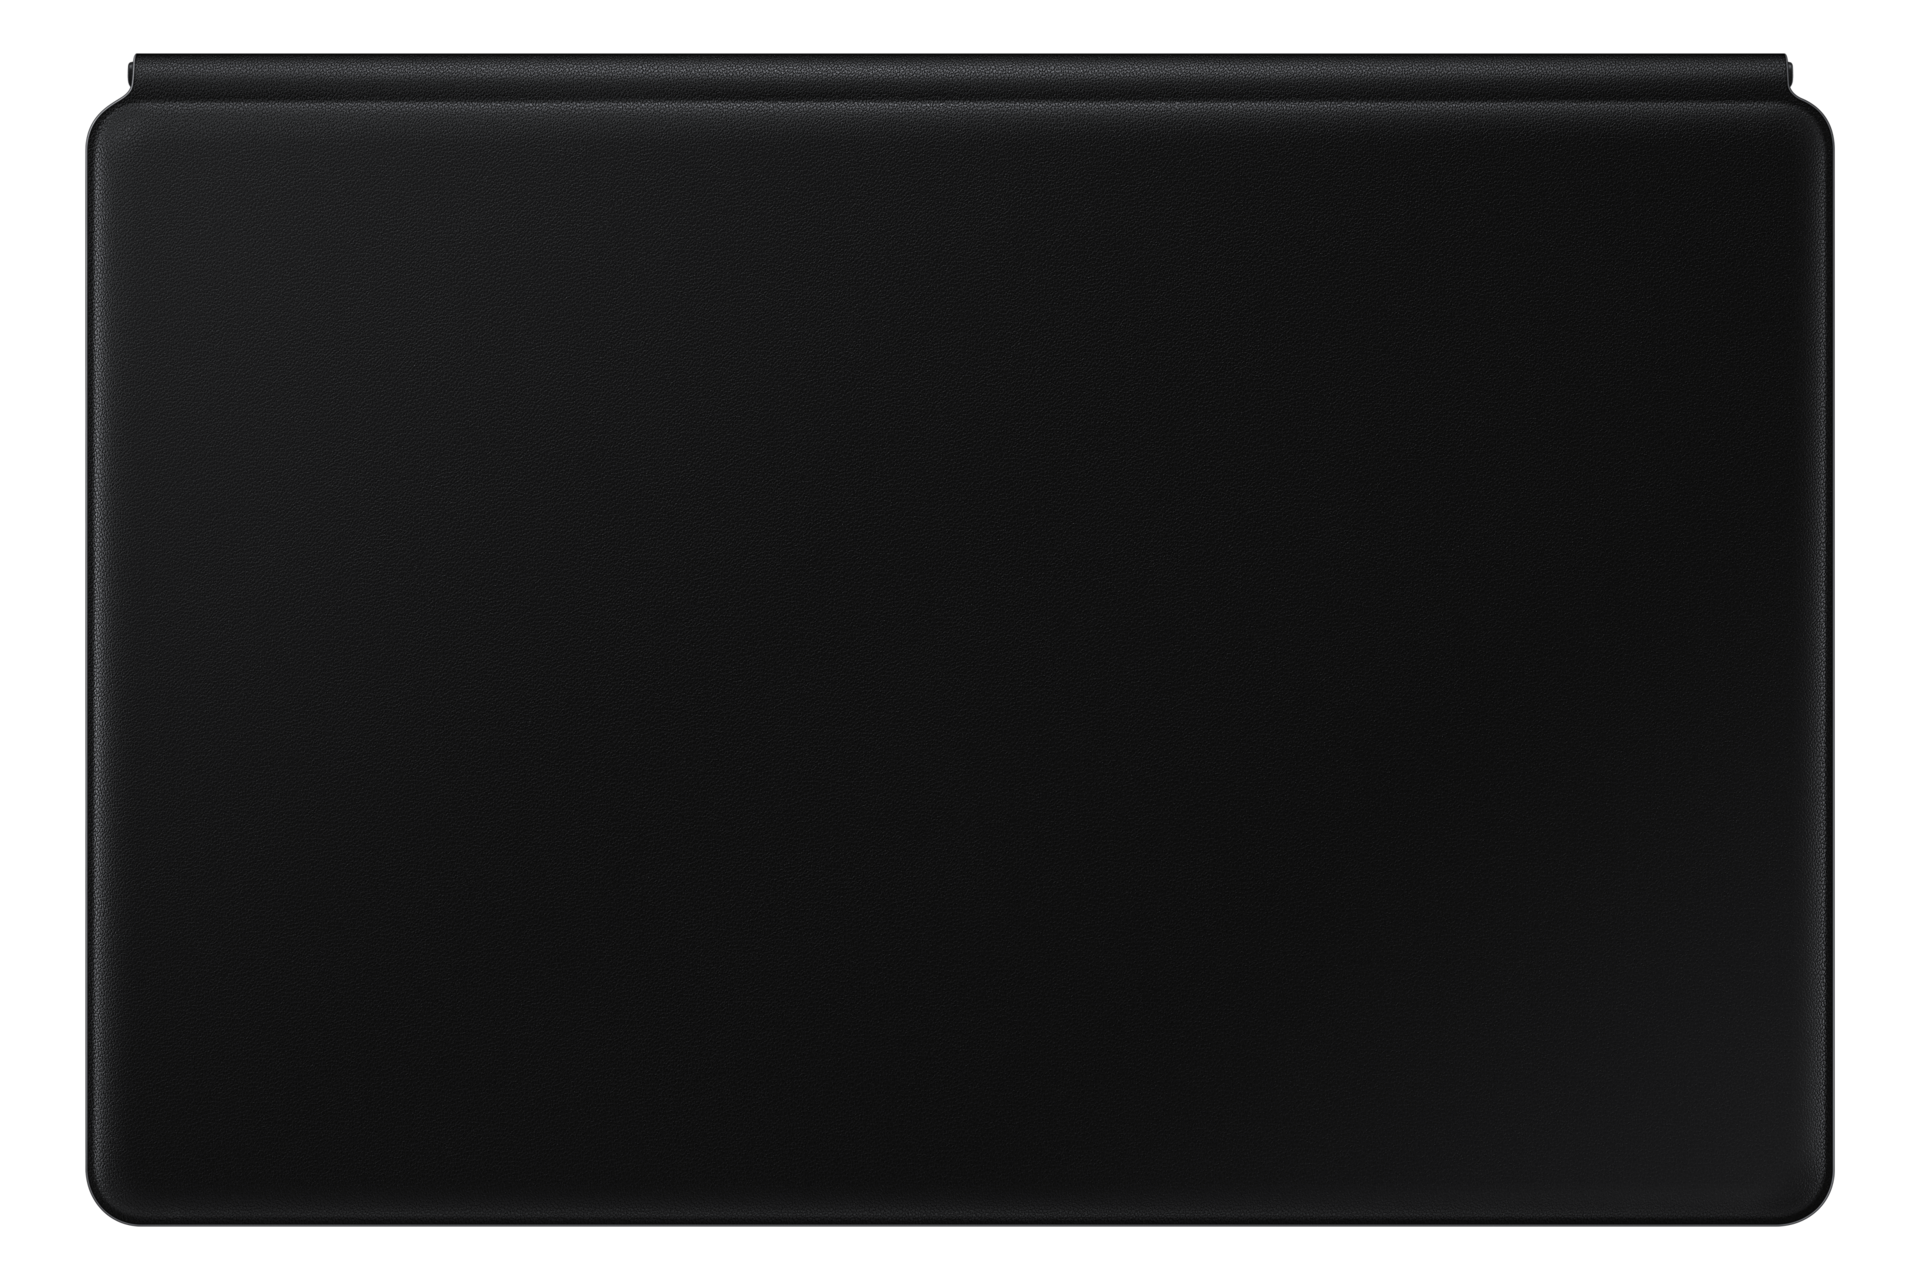 Keyboard Cover Galaxy Tab S7+ kopen? | BE